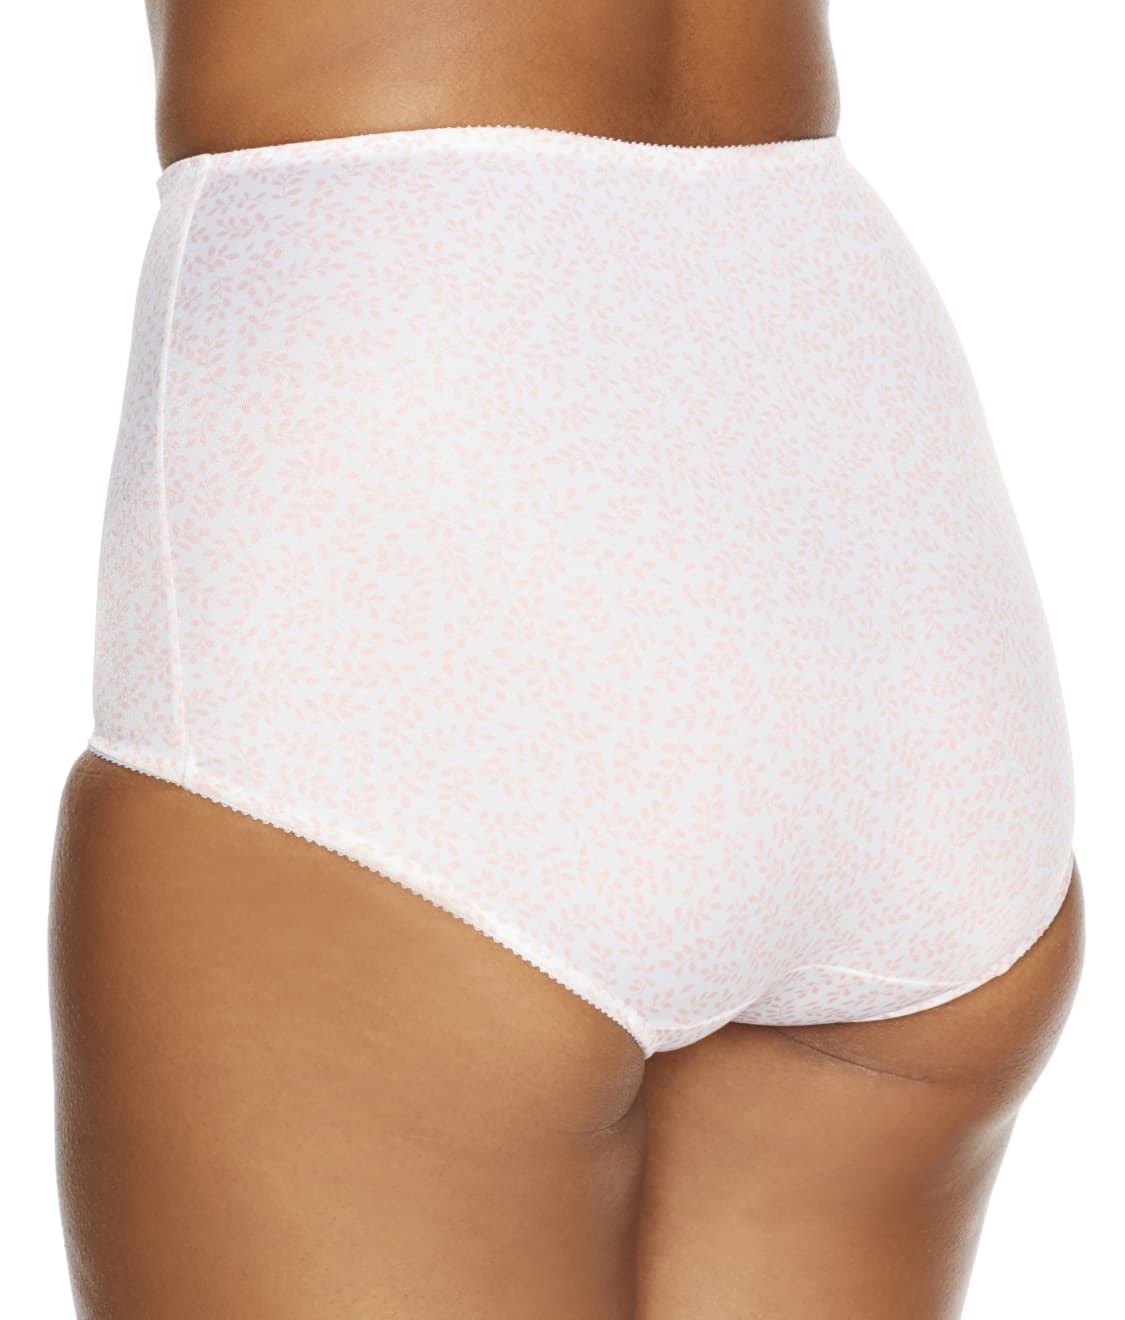 20 Womens La Marquise Comforts Lace Maxi Briefs 3 Pack Underwear White 